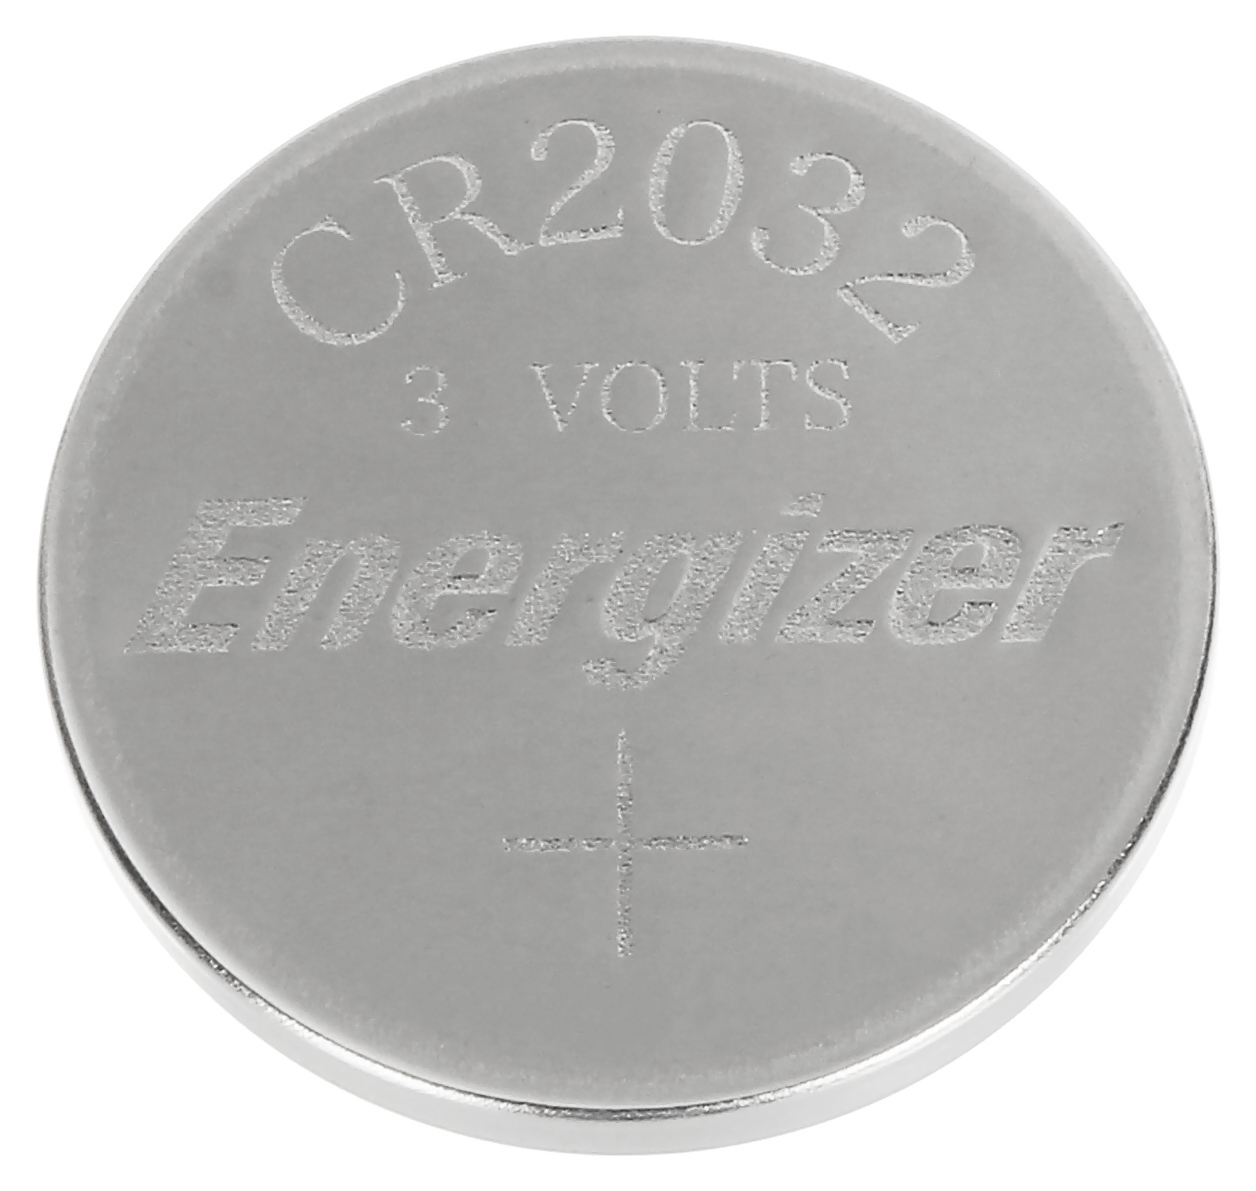 LITHIUM BATTERY BAT-CR2032 ENERGIZER - Coin Batteries - Delta